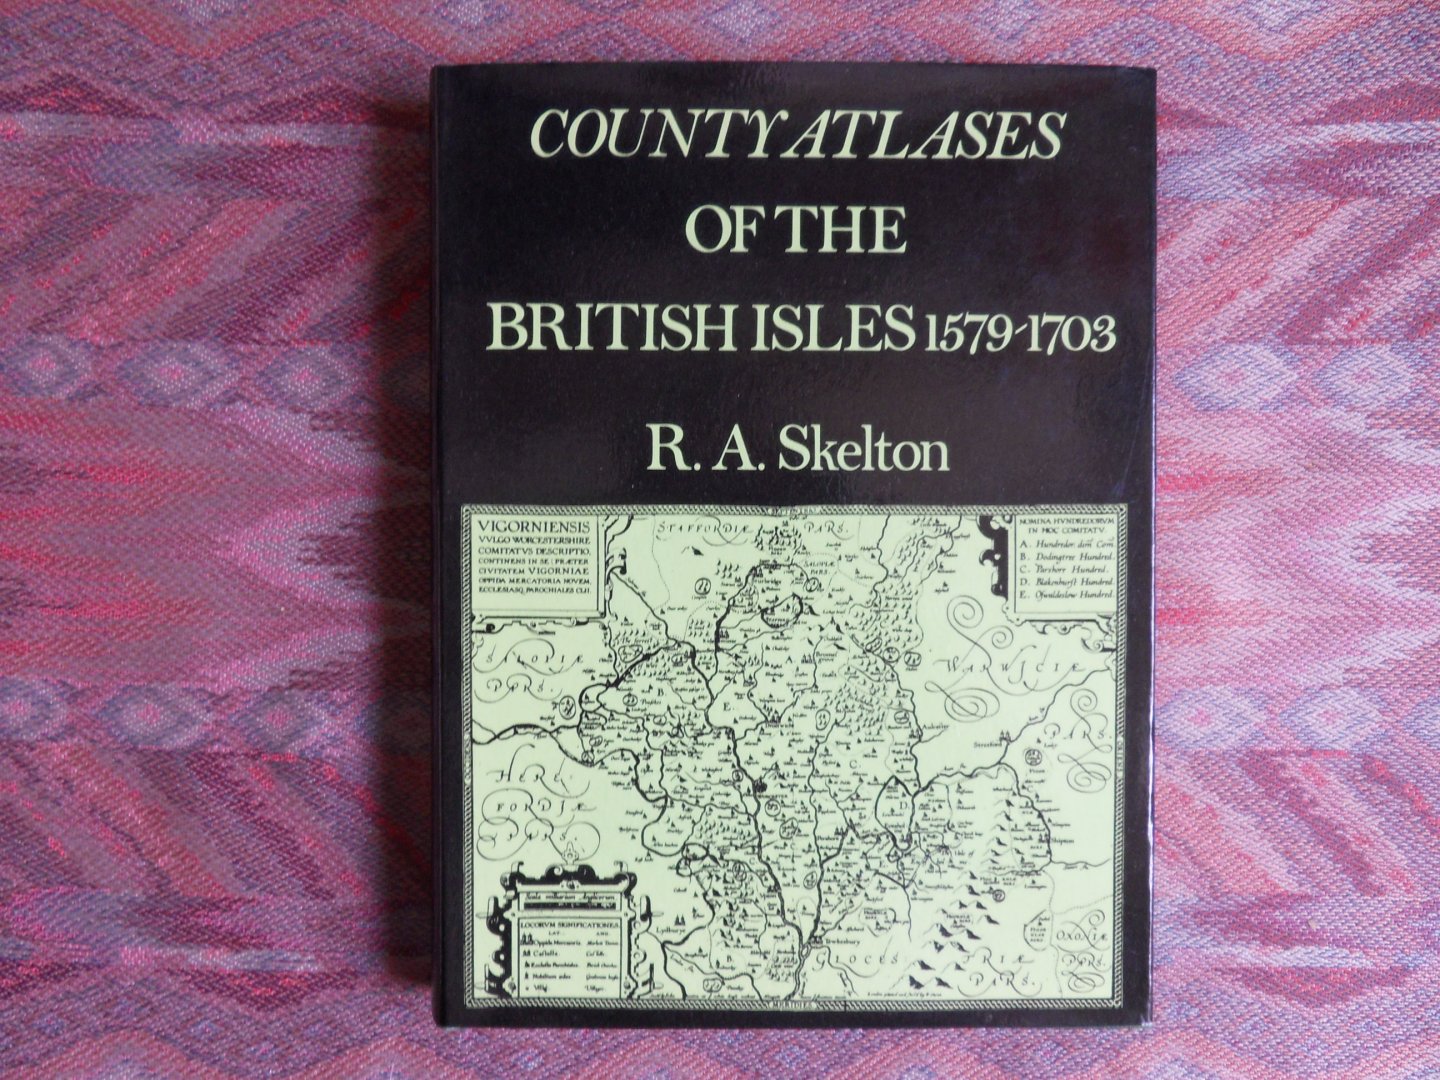 Skelton, R.A. - County Atlases of the British Isles 1579 - 1703. [ NIET de kleine uitgave ].